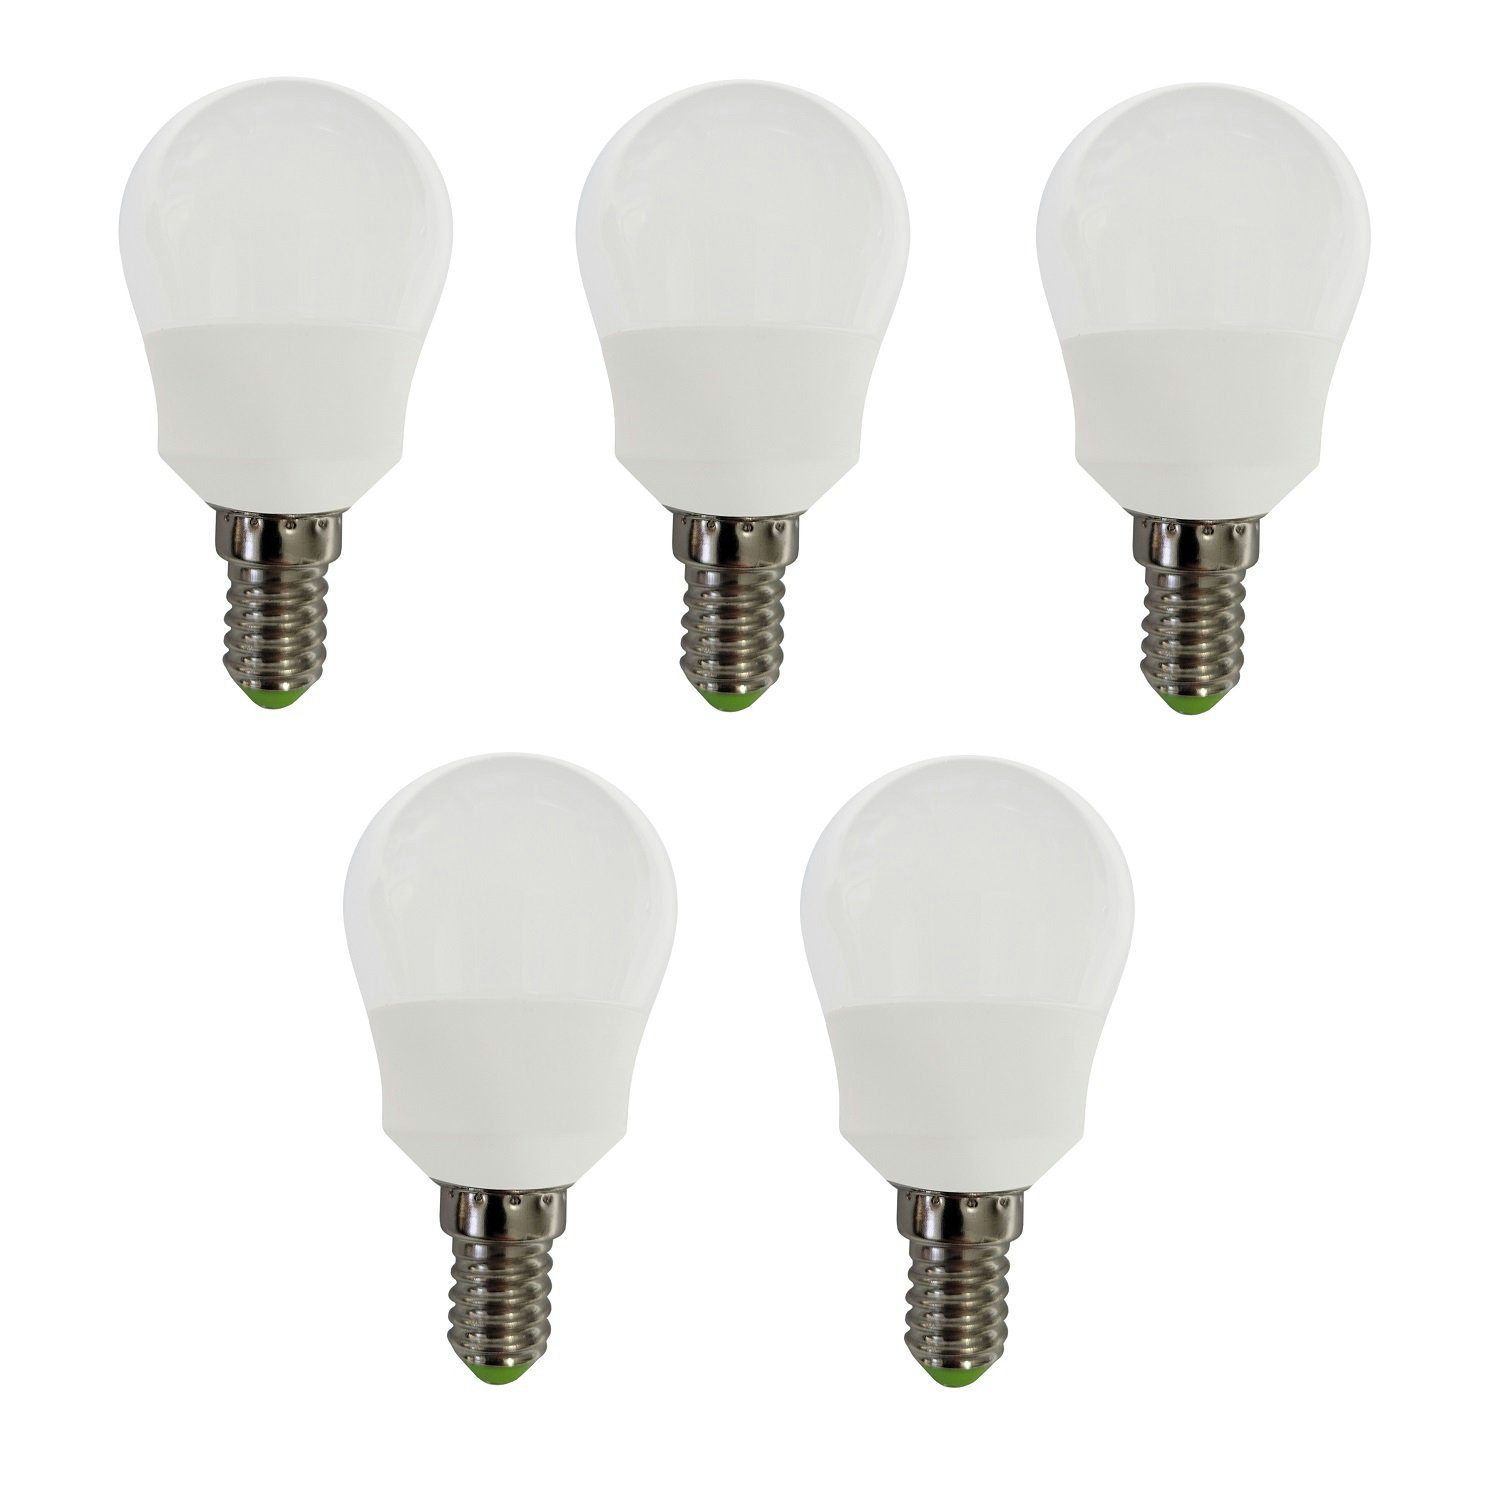 Provance LED-Leuchtmittel 5 x LED Glühlampe Glühbirne Kugel E14 6W 6 Watt 520 Lumen 3000 Kelvin, E14, 5 St., warmweiß